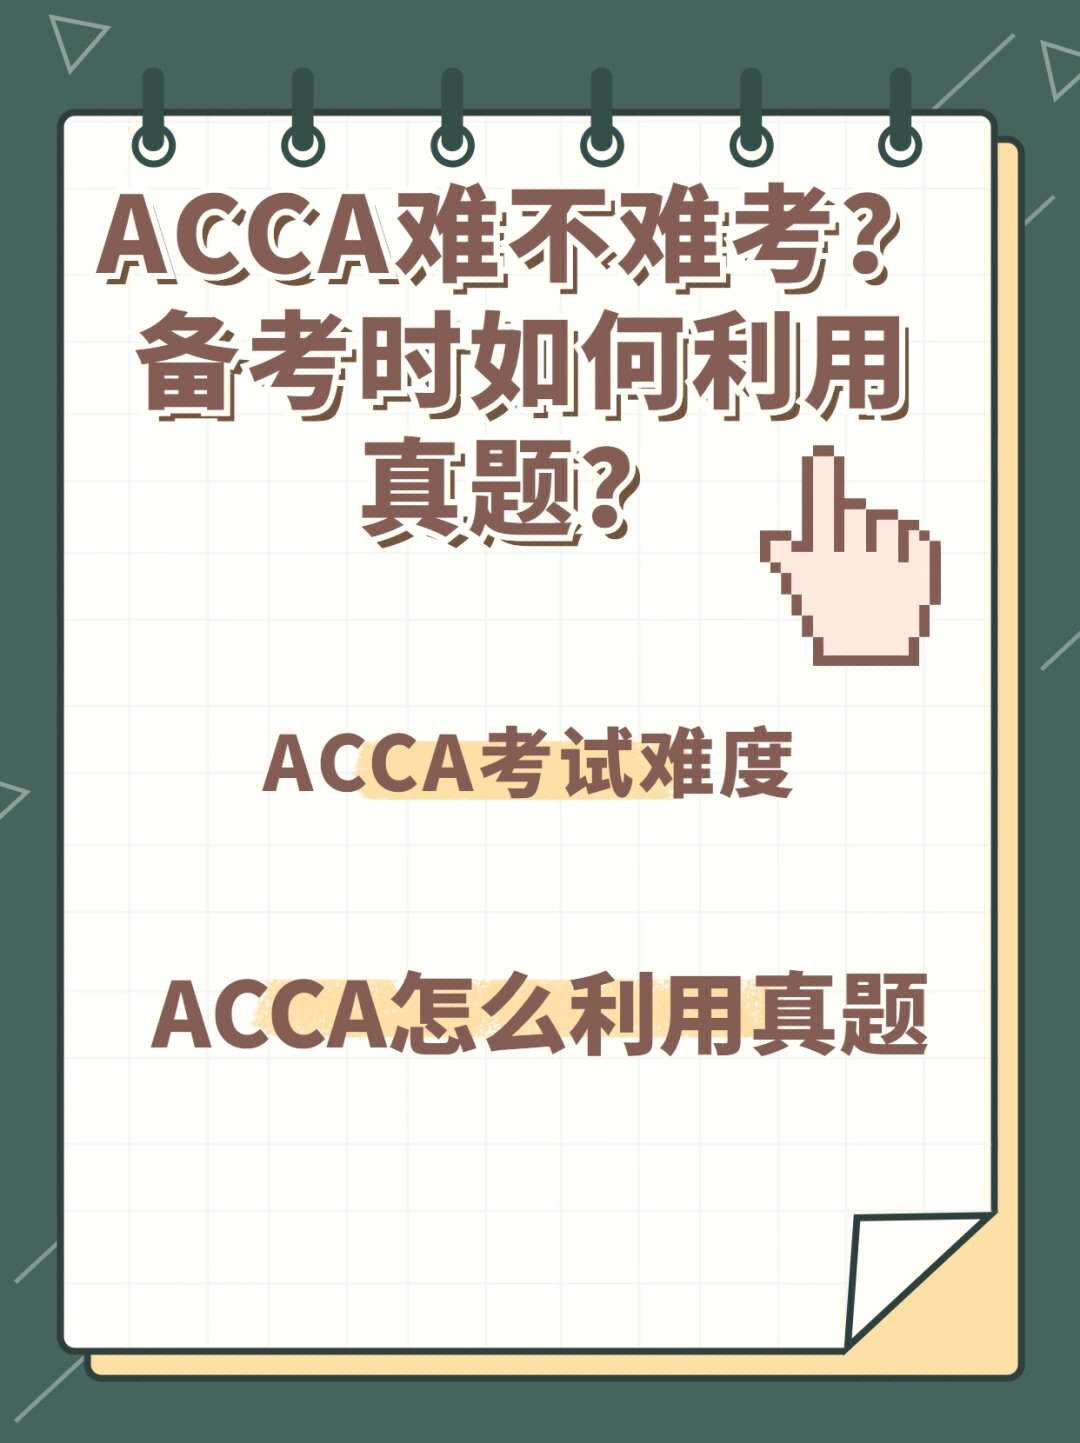 acca算是难度比较大的考试,acca知识的难度是基于英国大学学位考试的